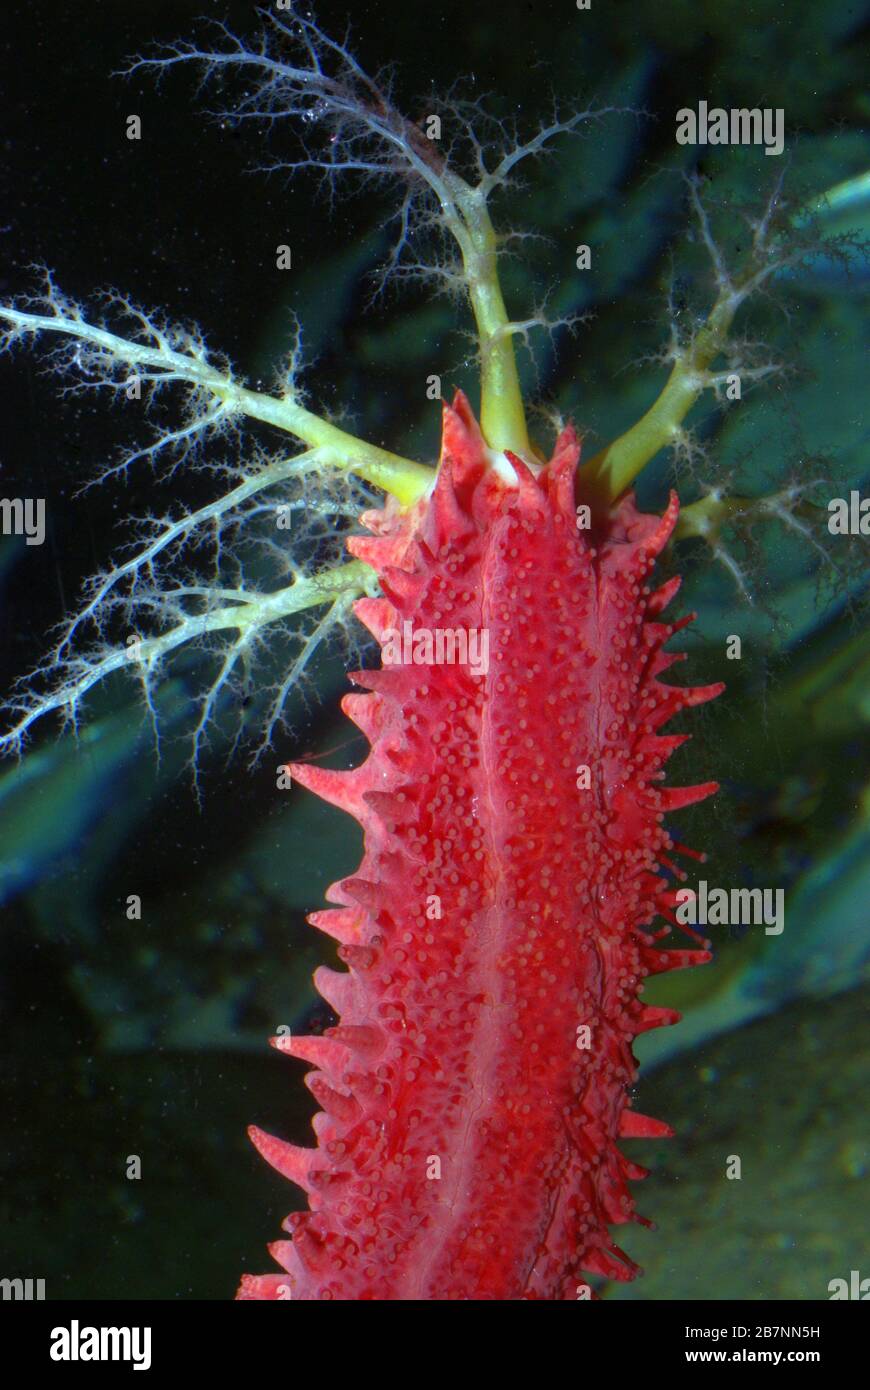 Red box sea cucumber, Cercodemas anceps Stock Photo